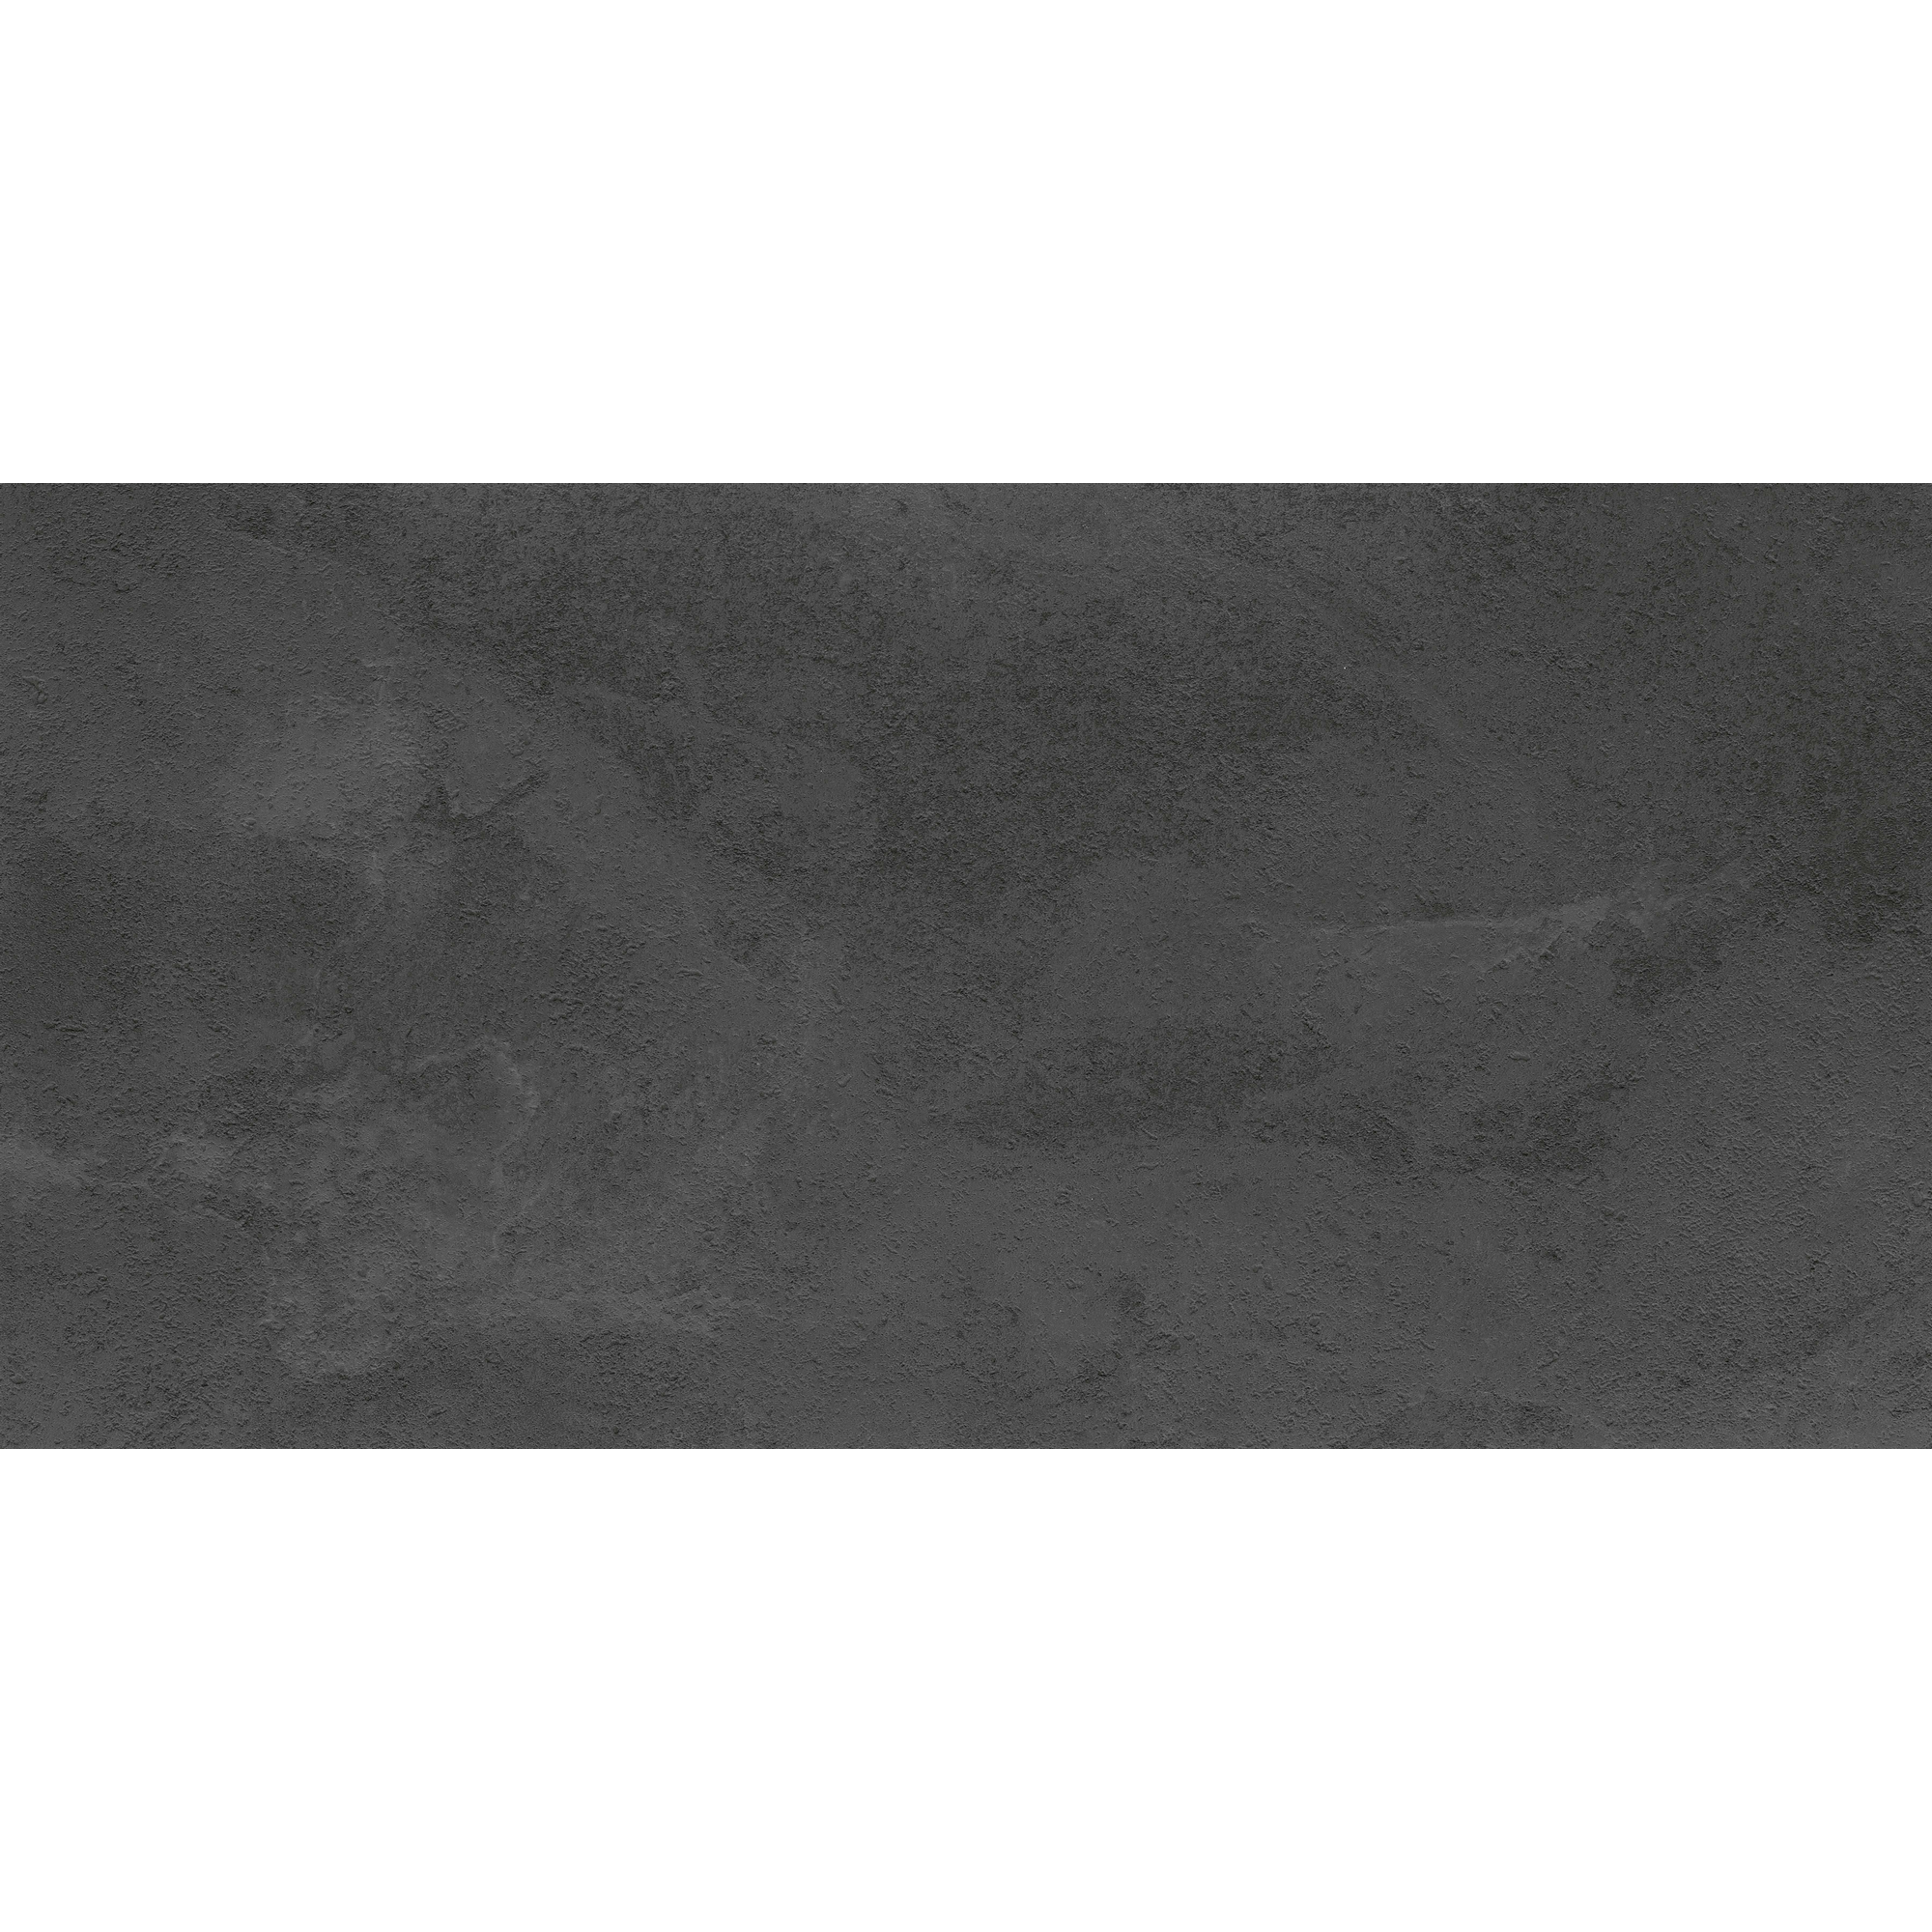 Vinylboden 'Rigid' Natural Slate grau 4 mm + product picture